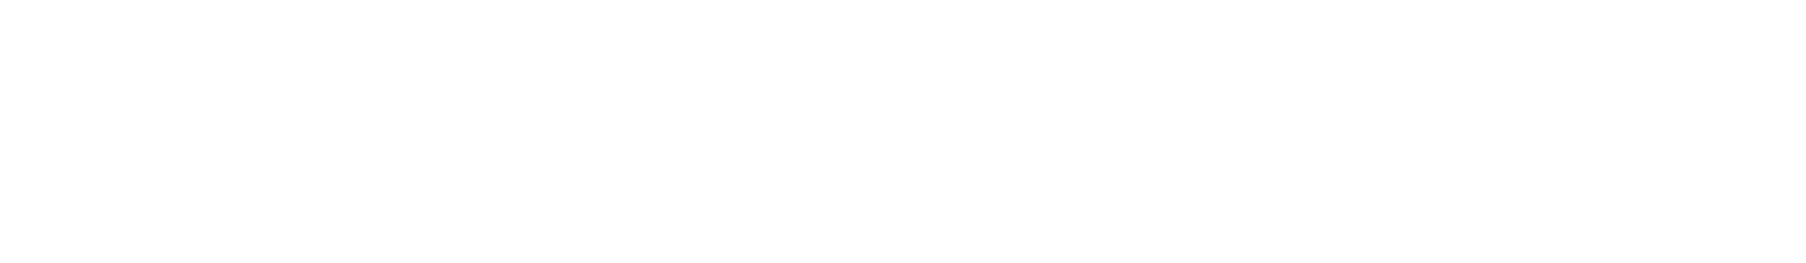 knitwitter logo